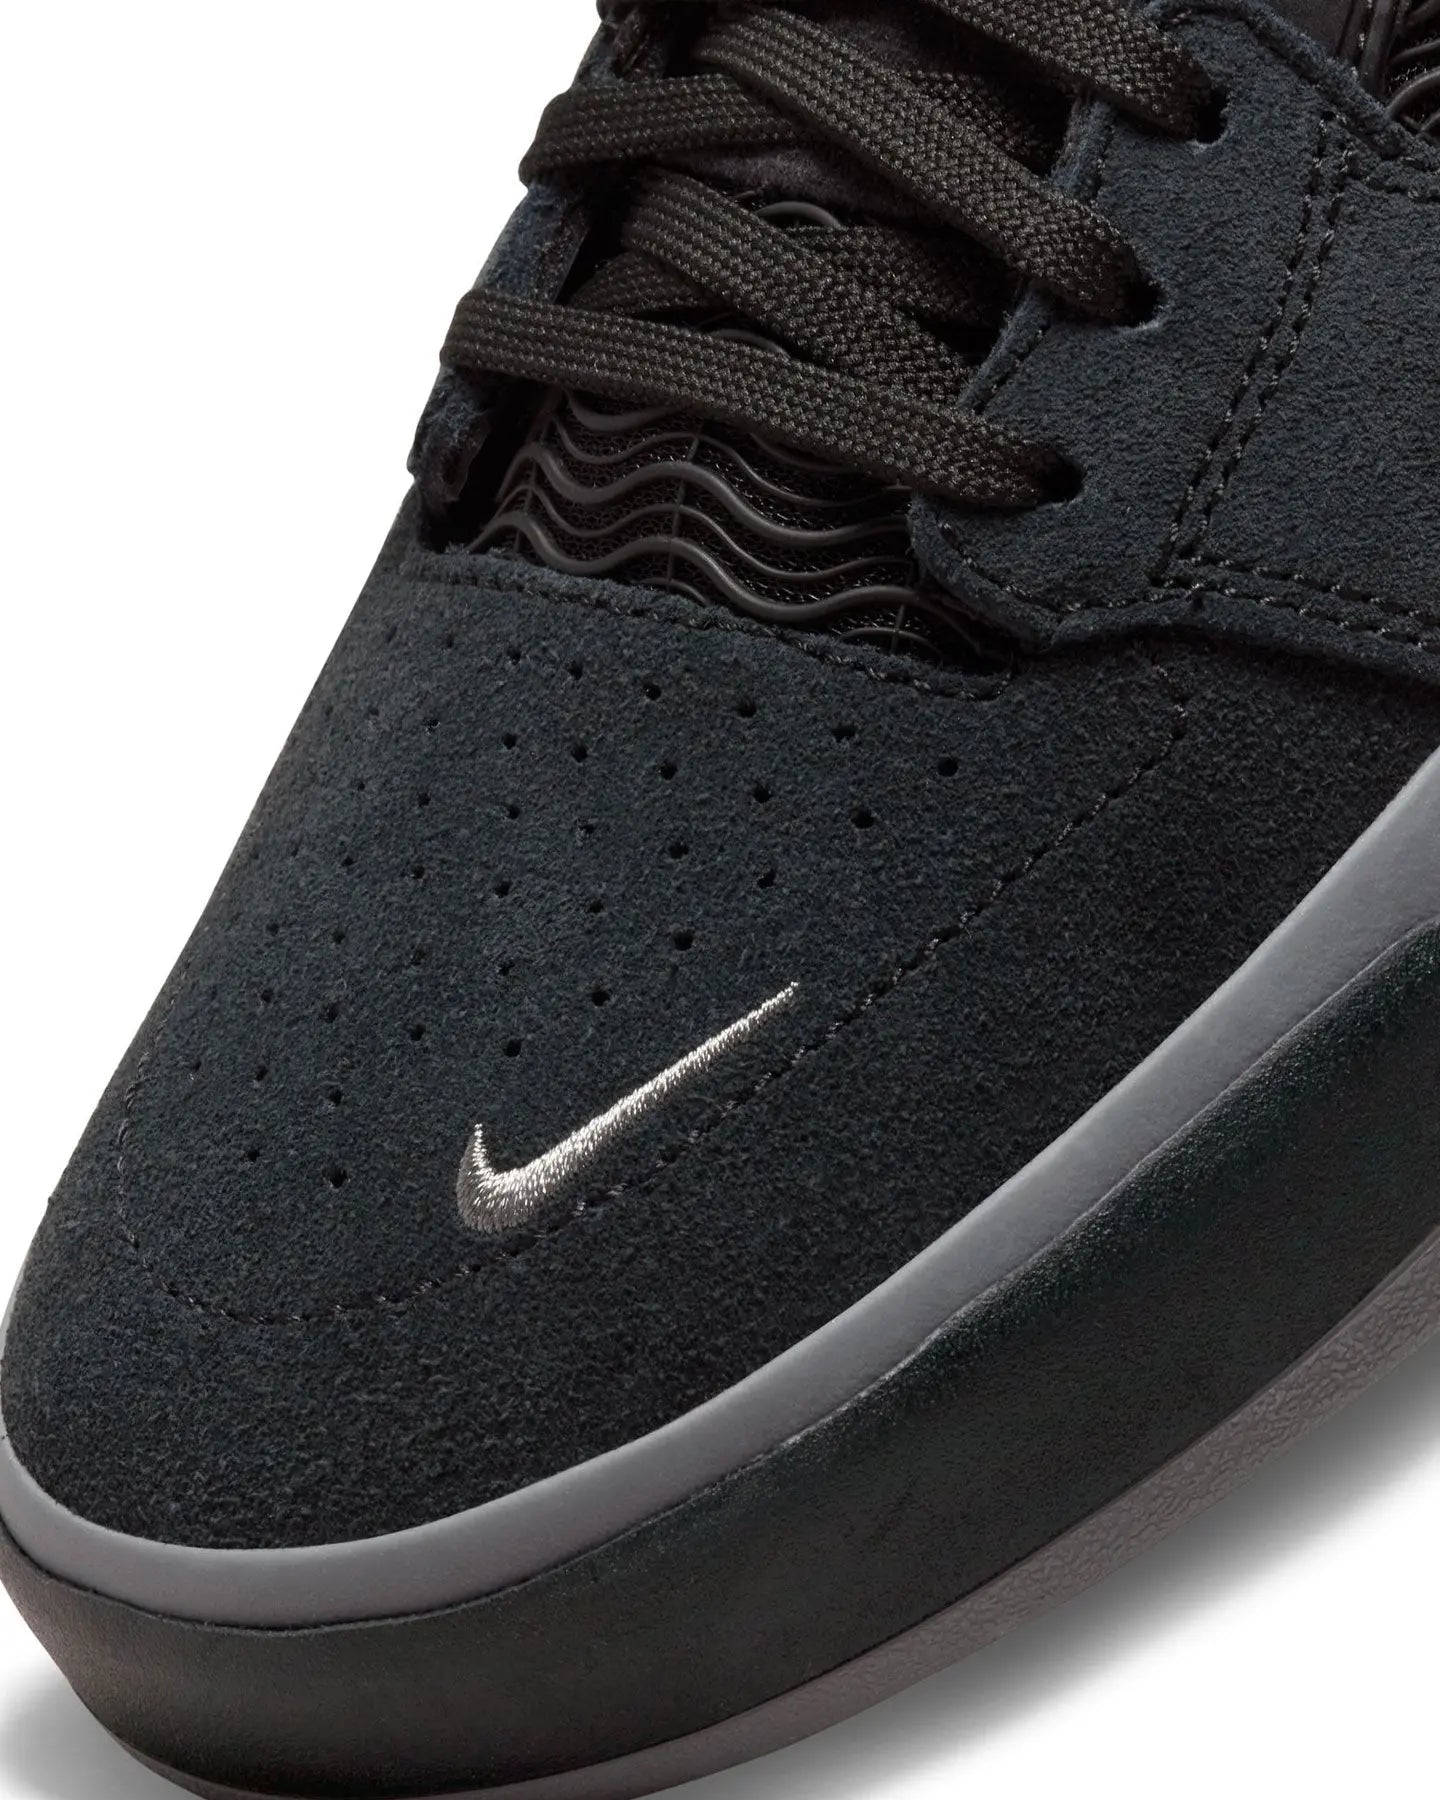 Nike SB Ishod - Black / Grey / Black Footwear